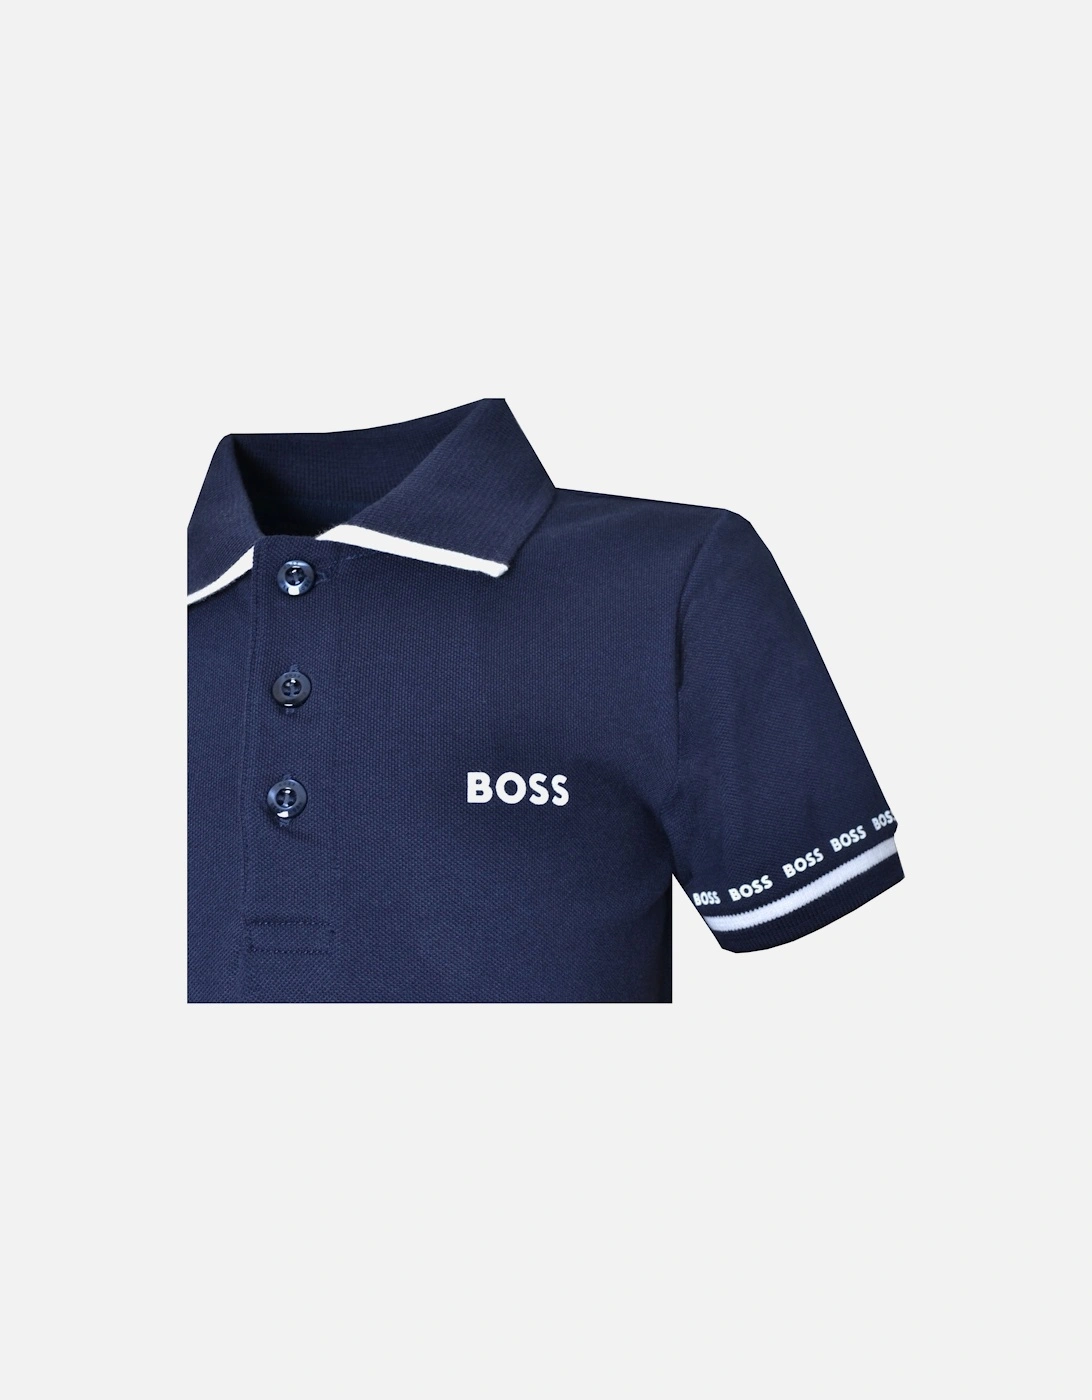 Boy's Navy Slim fit Polo Shirt